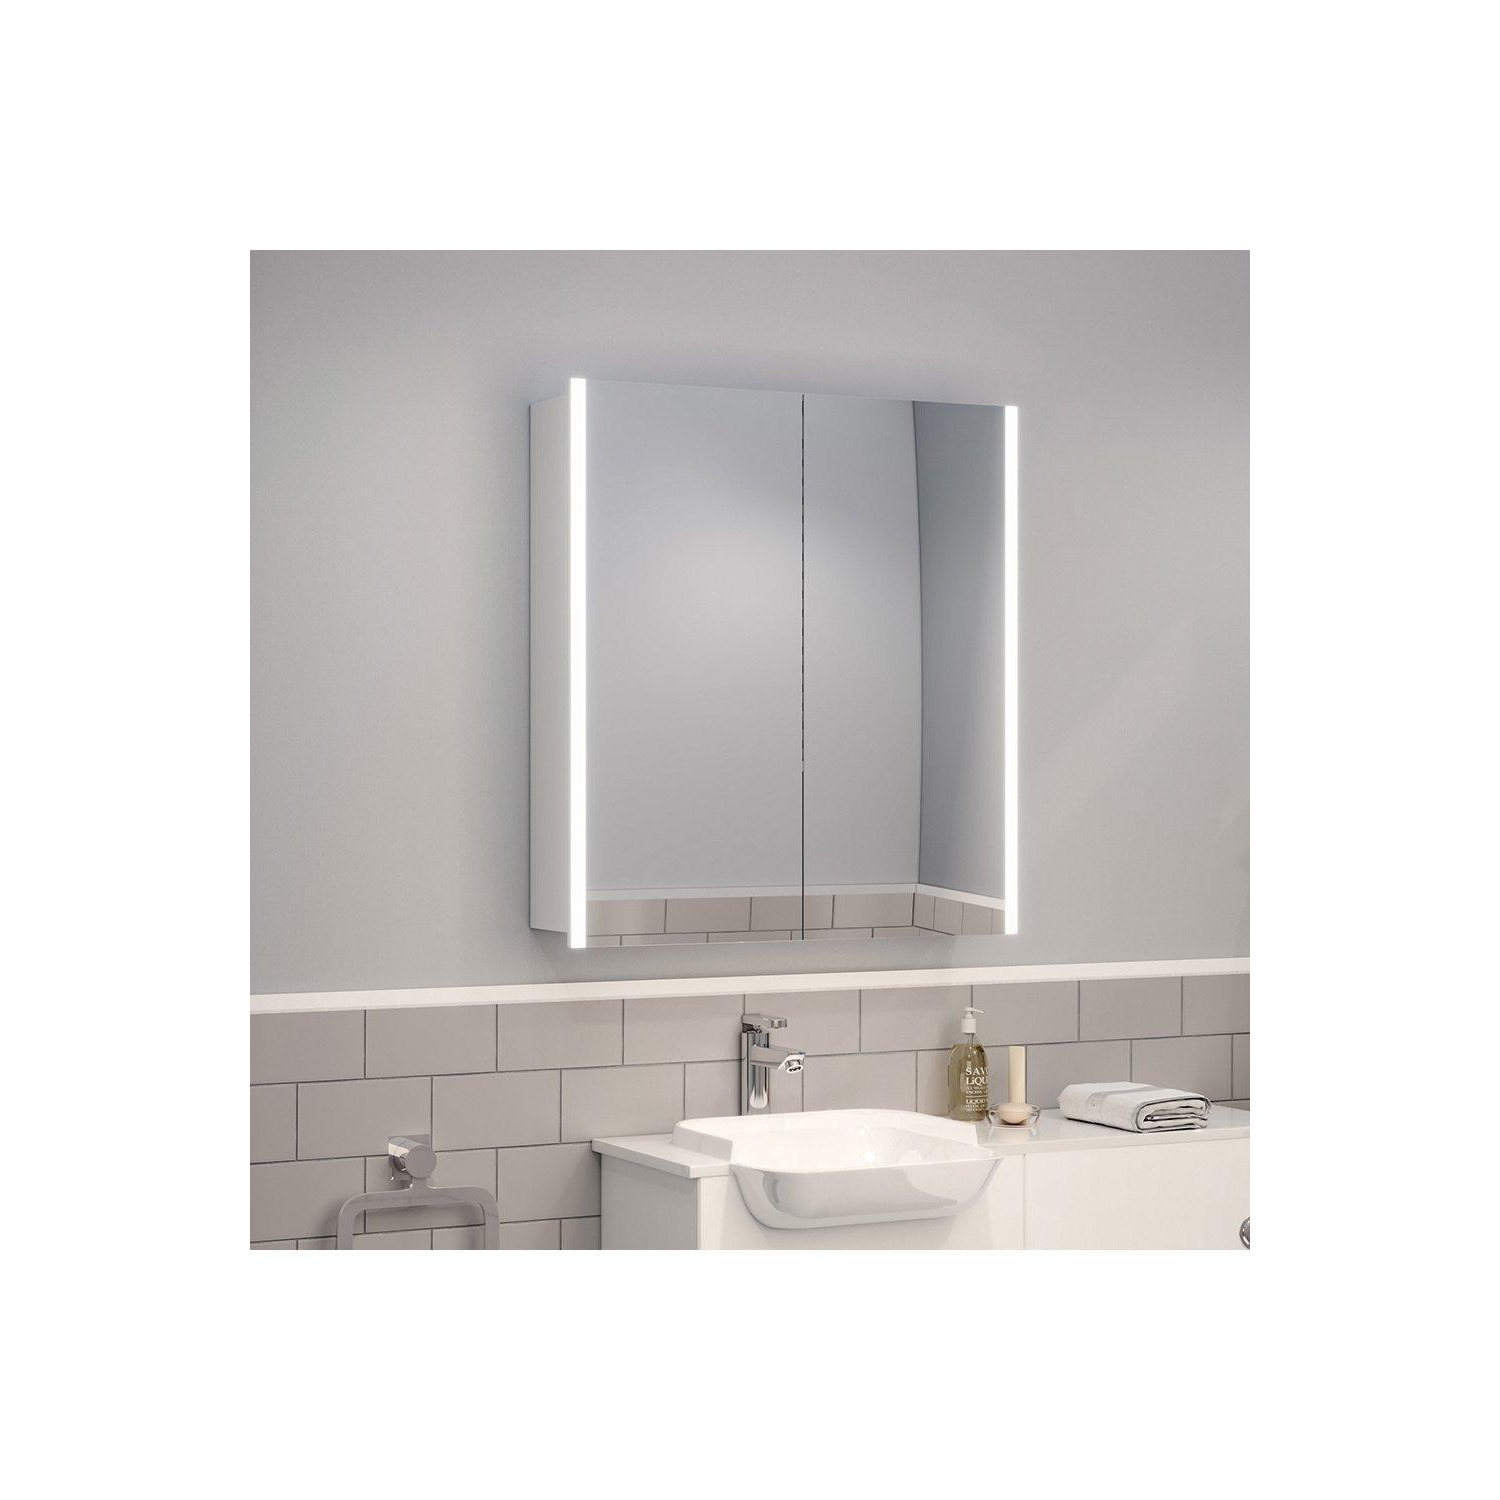 Wall Mount LED Bathroom Mirror Cabinet with Defogger, Shaver Socket - image 1